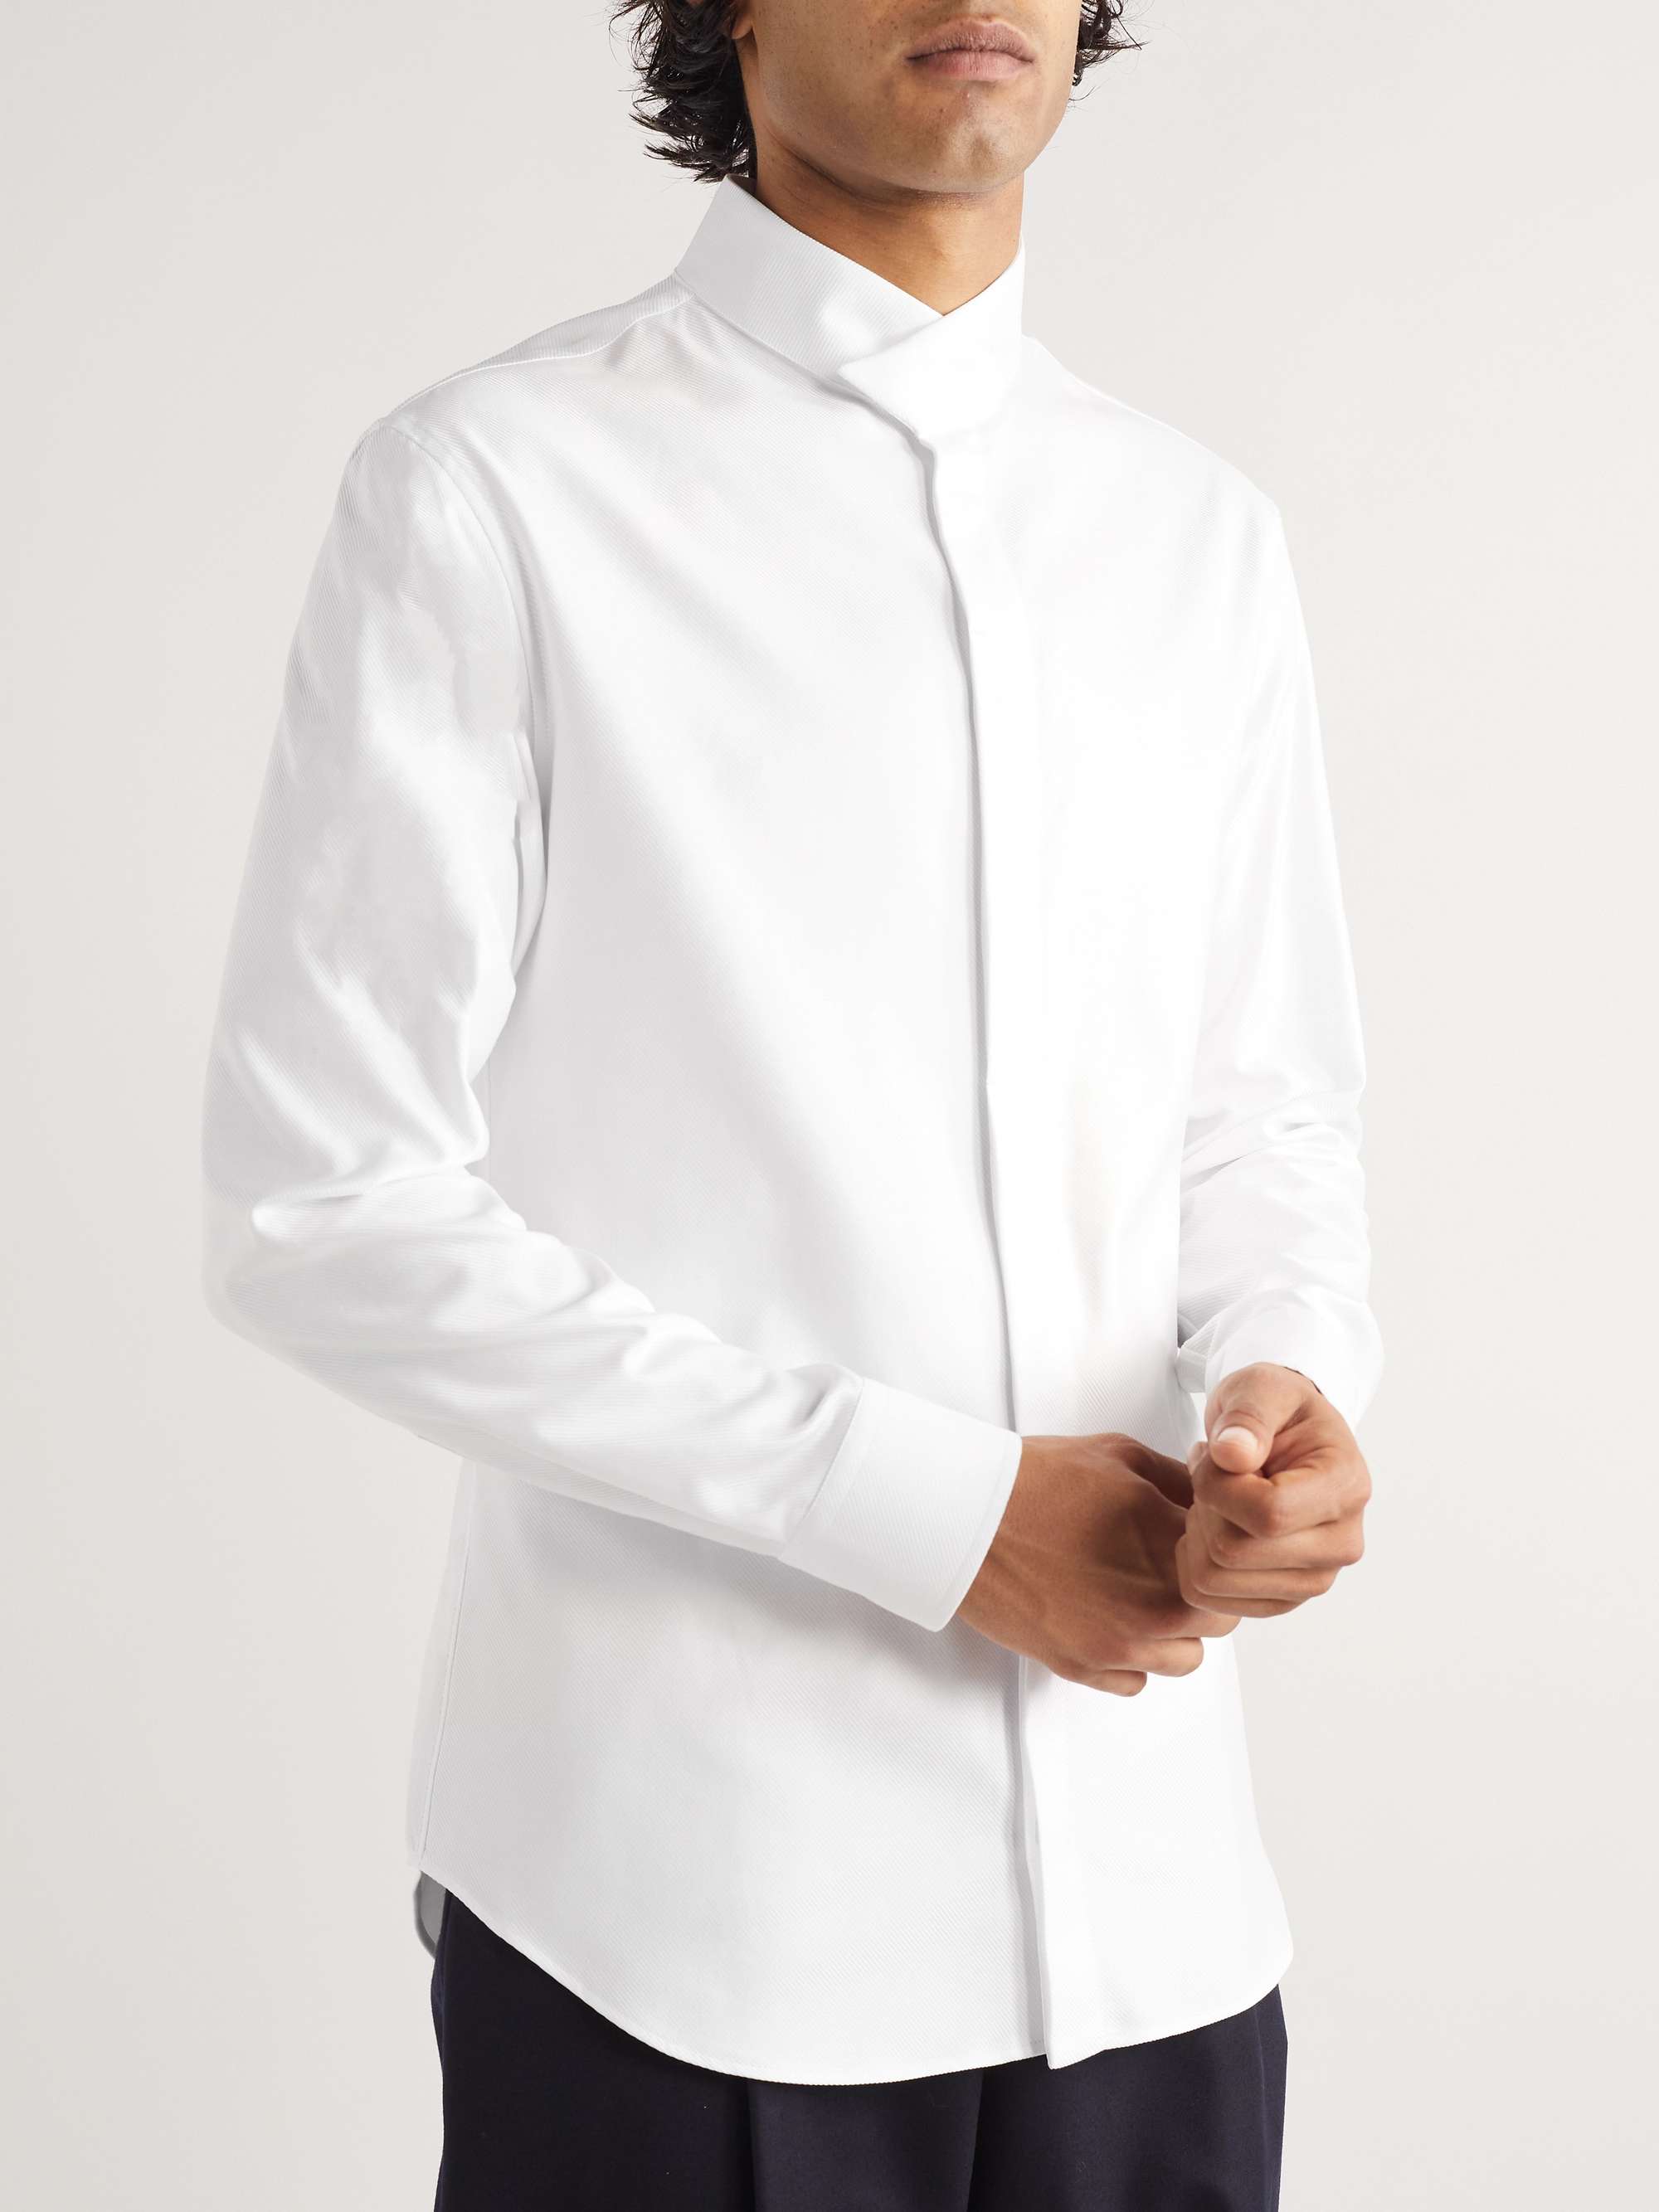 GIORGIO ARMANI Cotton-Poplin Tuxedo Shirt